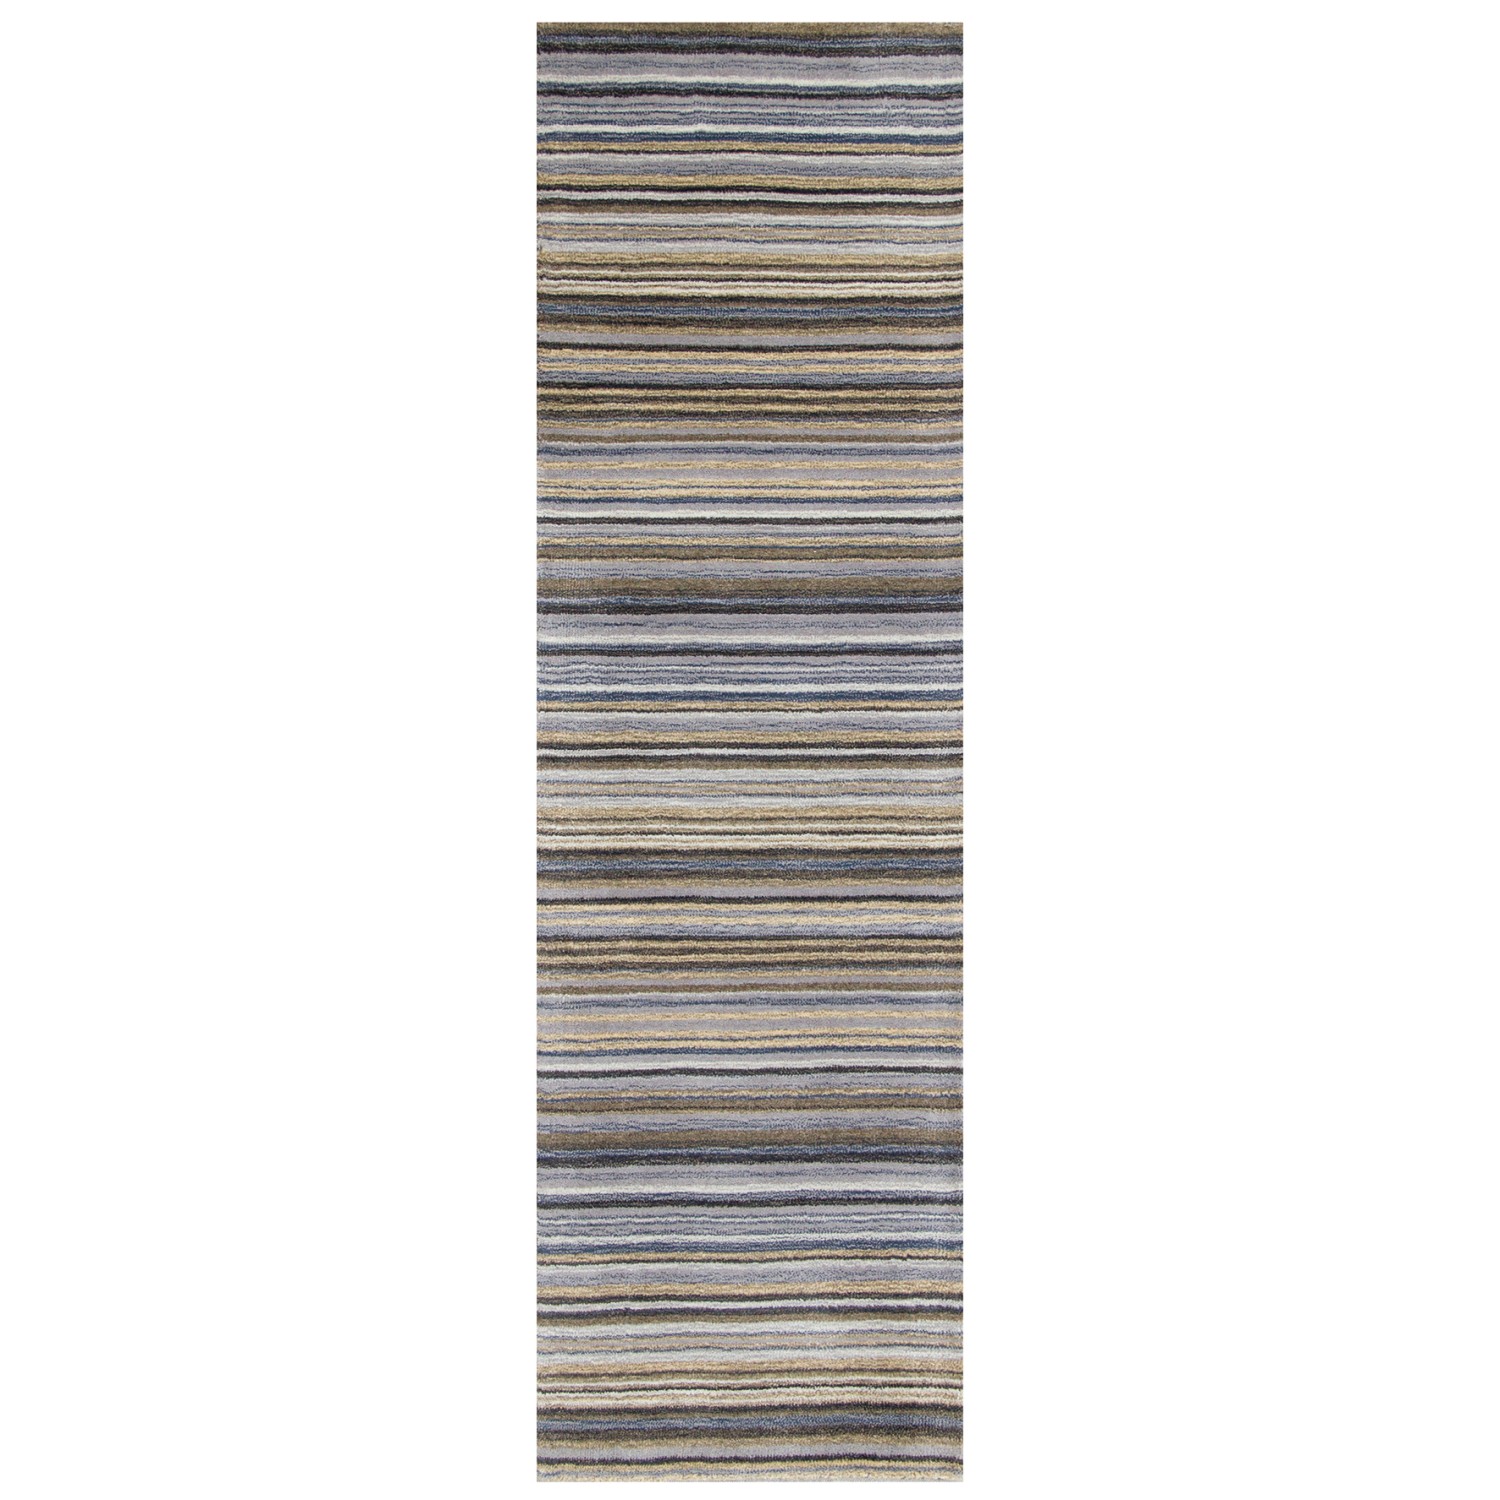 Carter Natural Beige Brown Rug Runner ALL SIZES 100% Wool Stripe Pattern Striped 